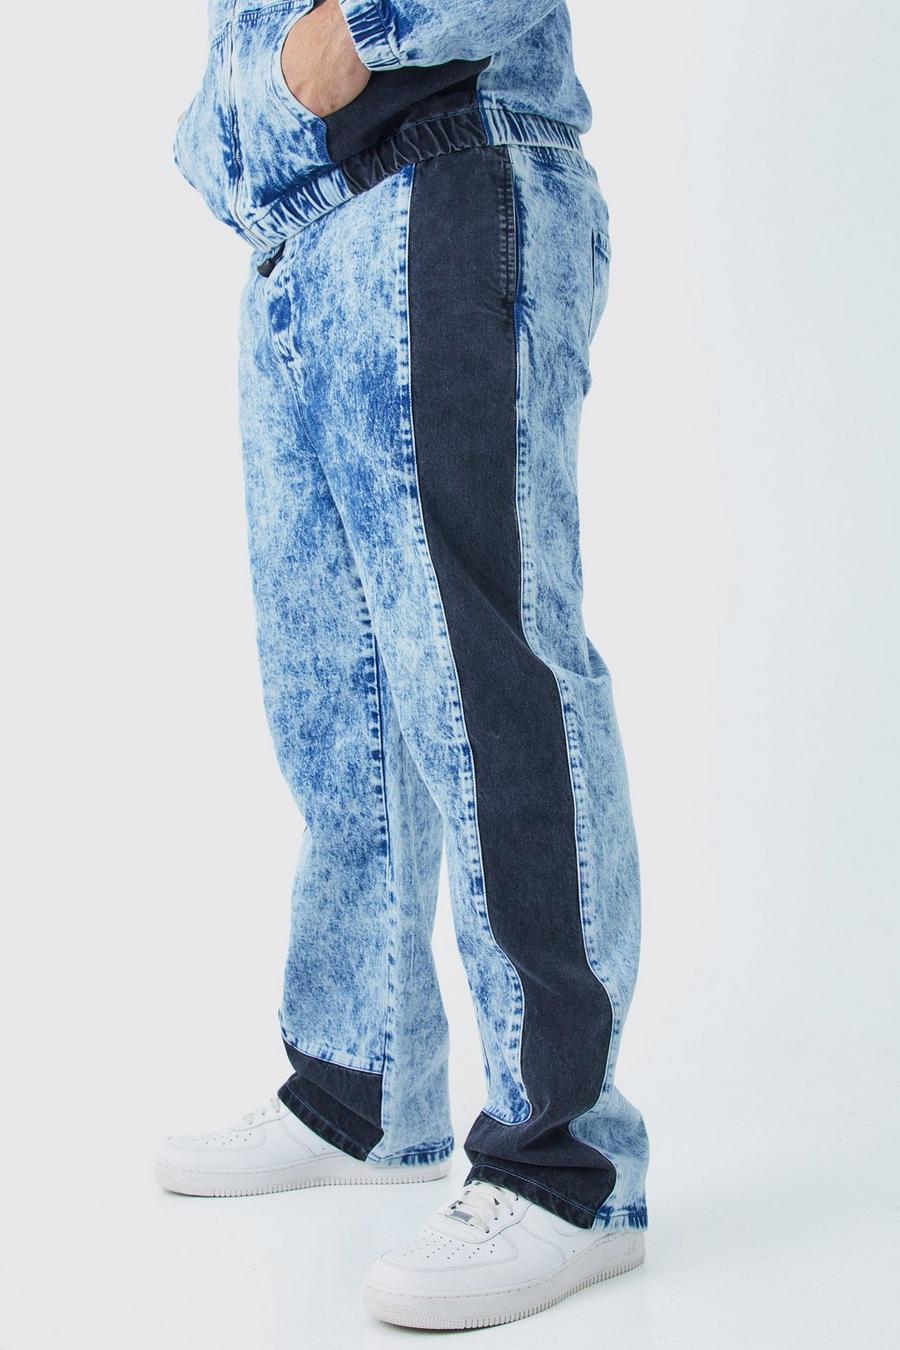 Pantalón deportivo Plus holgado vaquero con lavado de ácido, Light blue